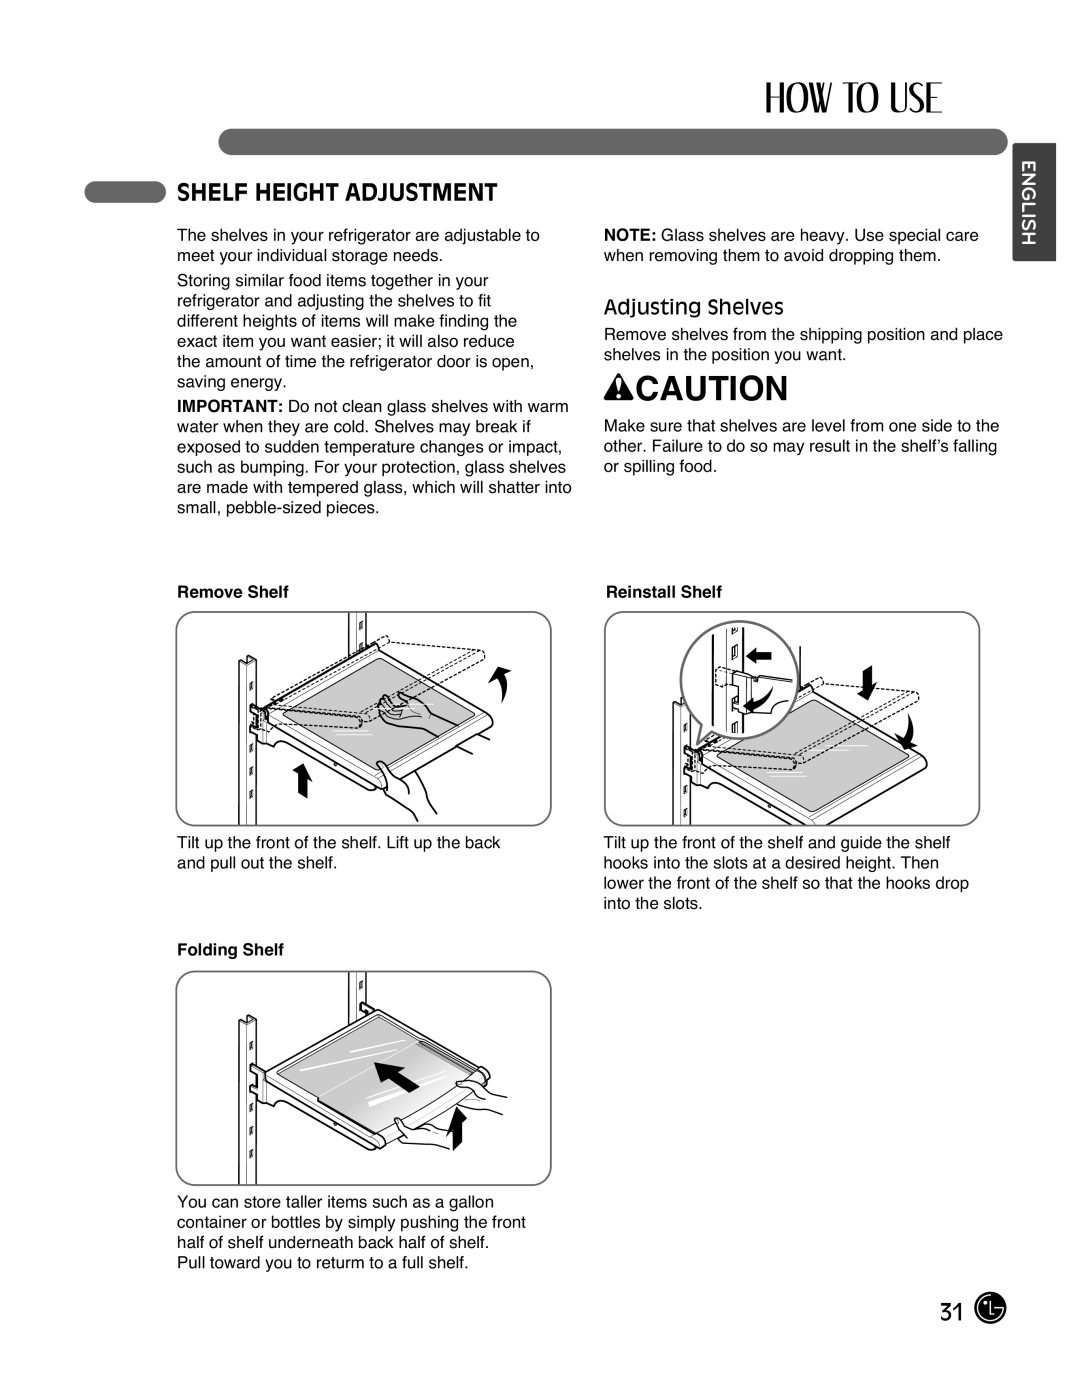 LG Electronics LMX25988ST owner manual Shelf Height Adjustment, Adjusting Shelves, wCAUTION, English 